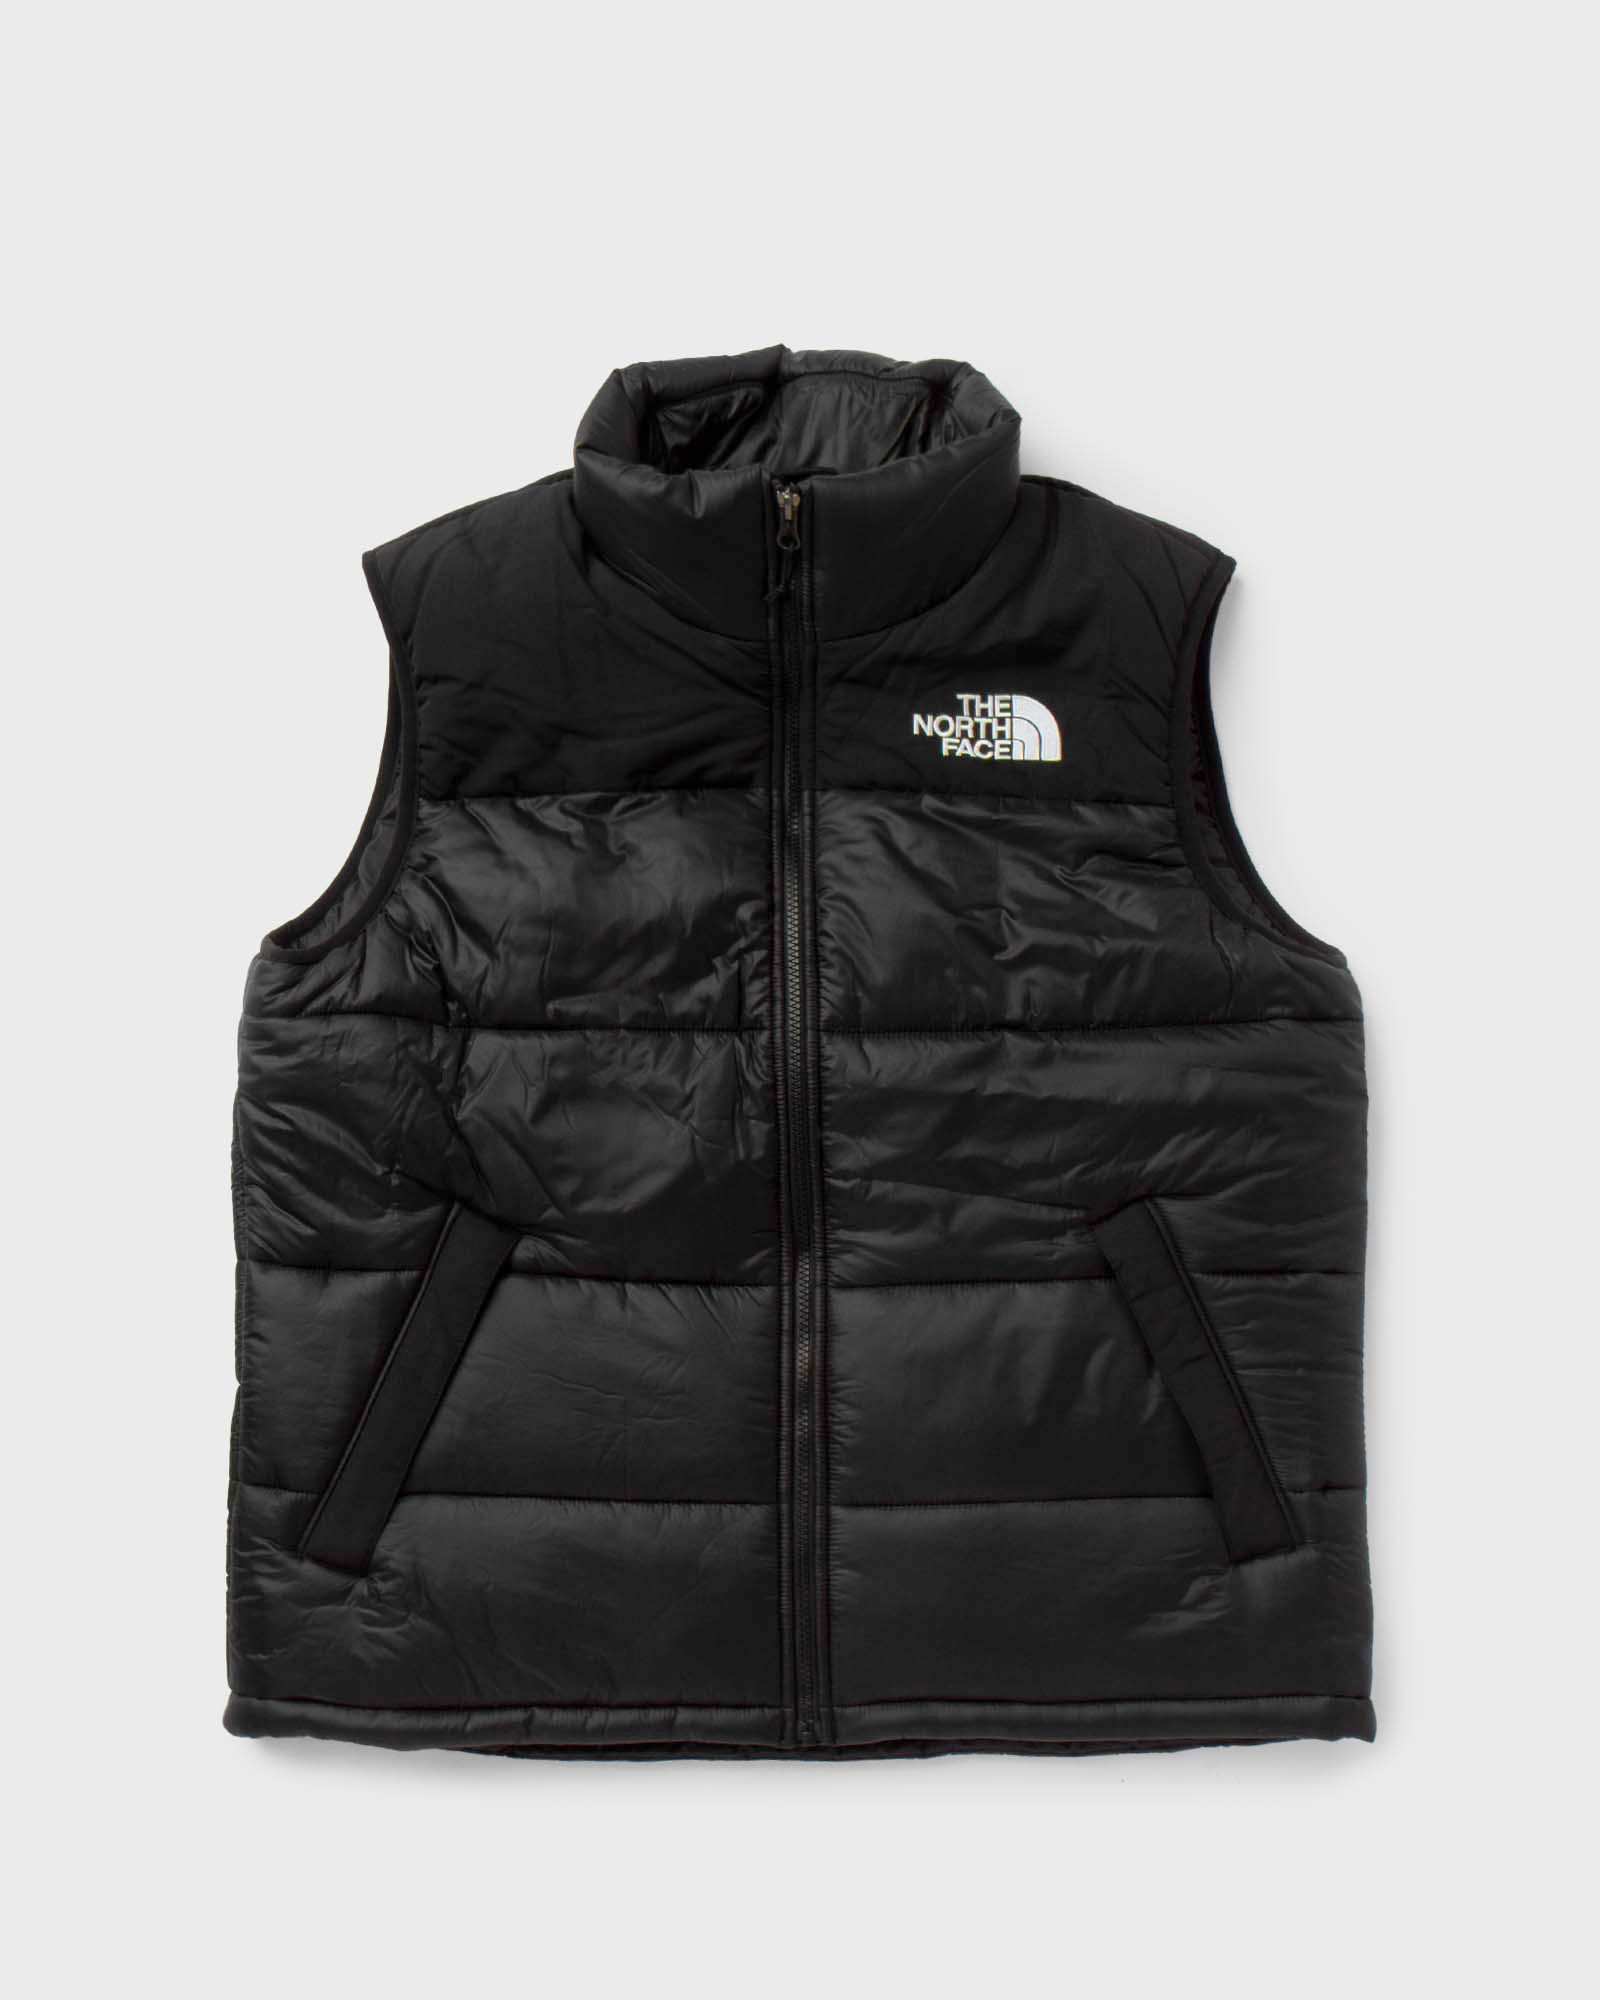 The North Face - himalayan insulated vest men vests black in größe:xxl